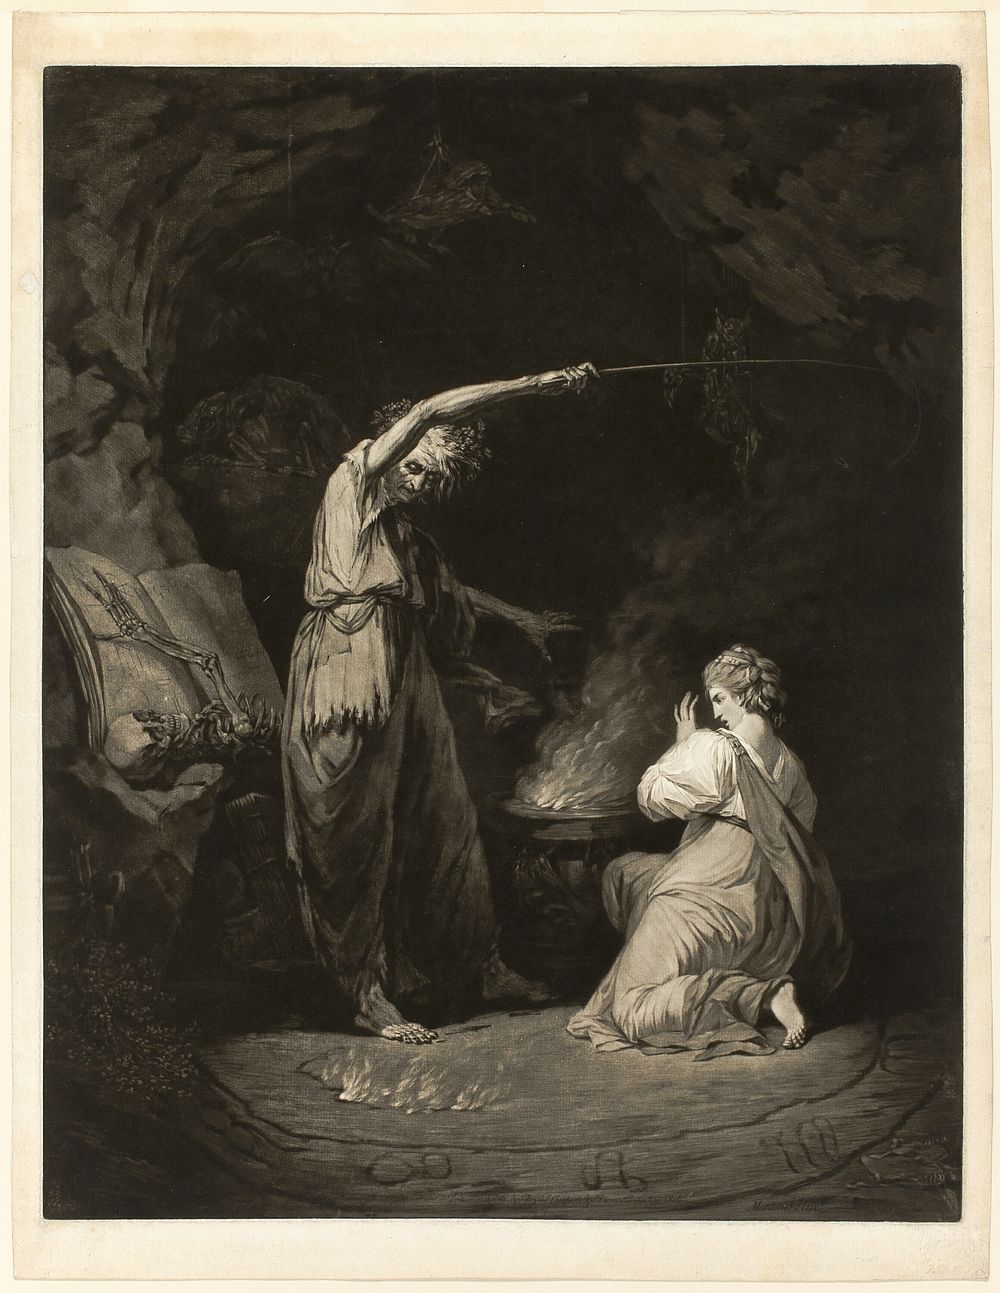 The Witches' Cauldron or Incantation by John Dixon